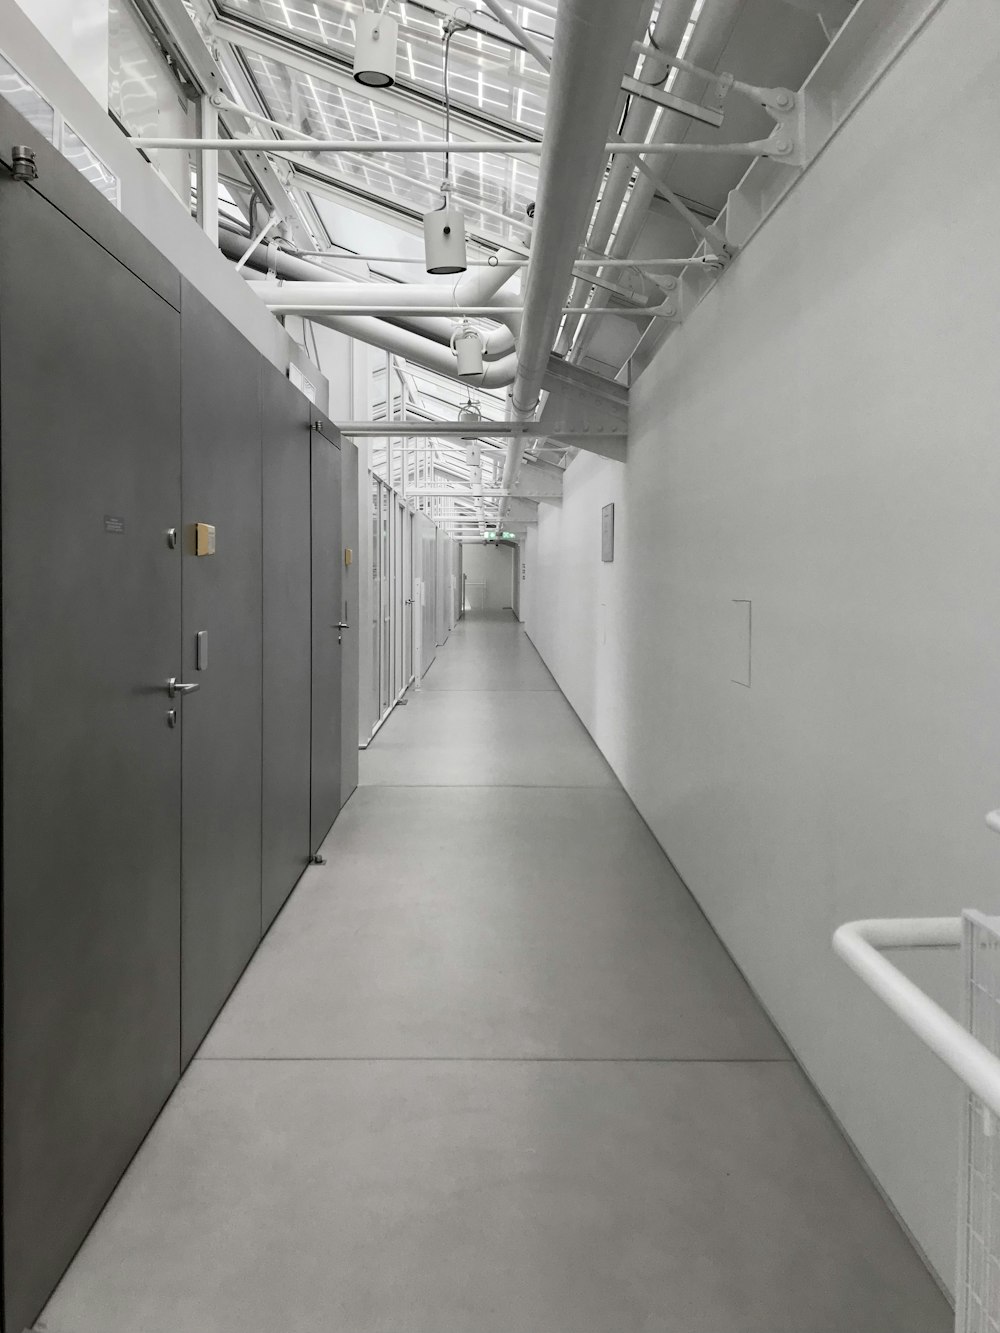 a long hallway with metal doors